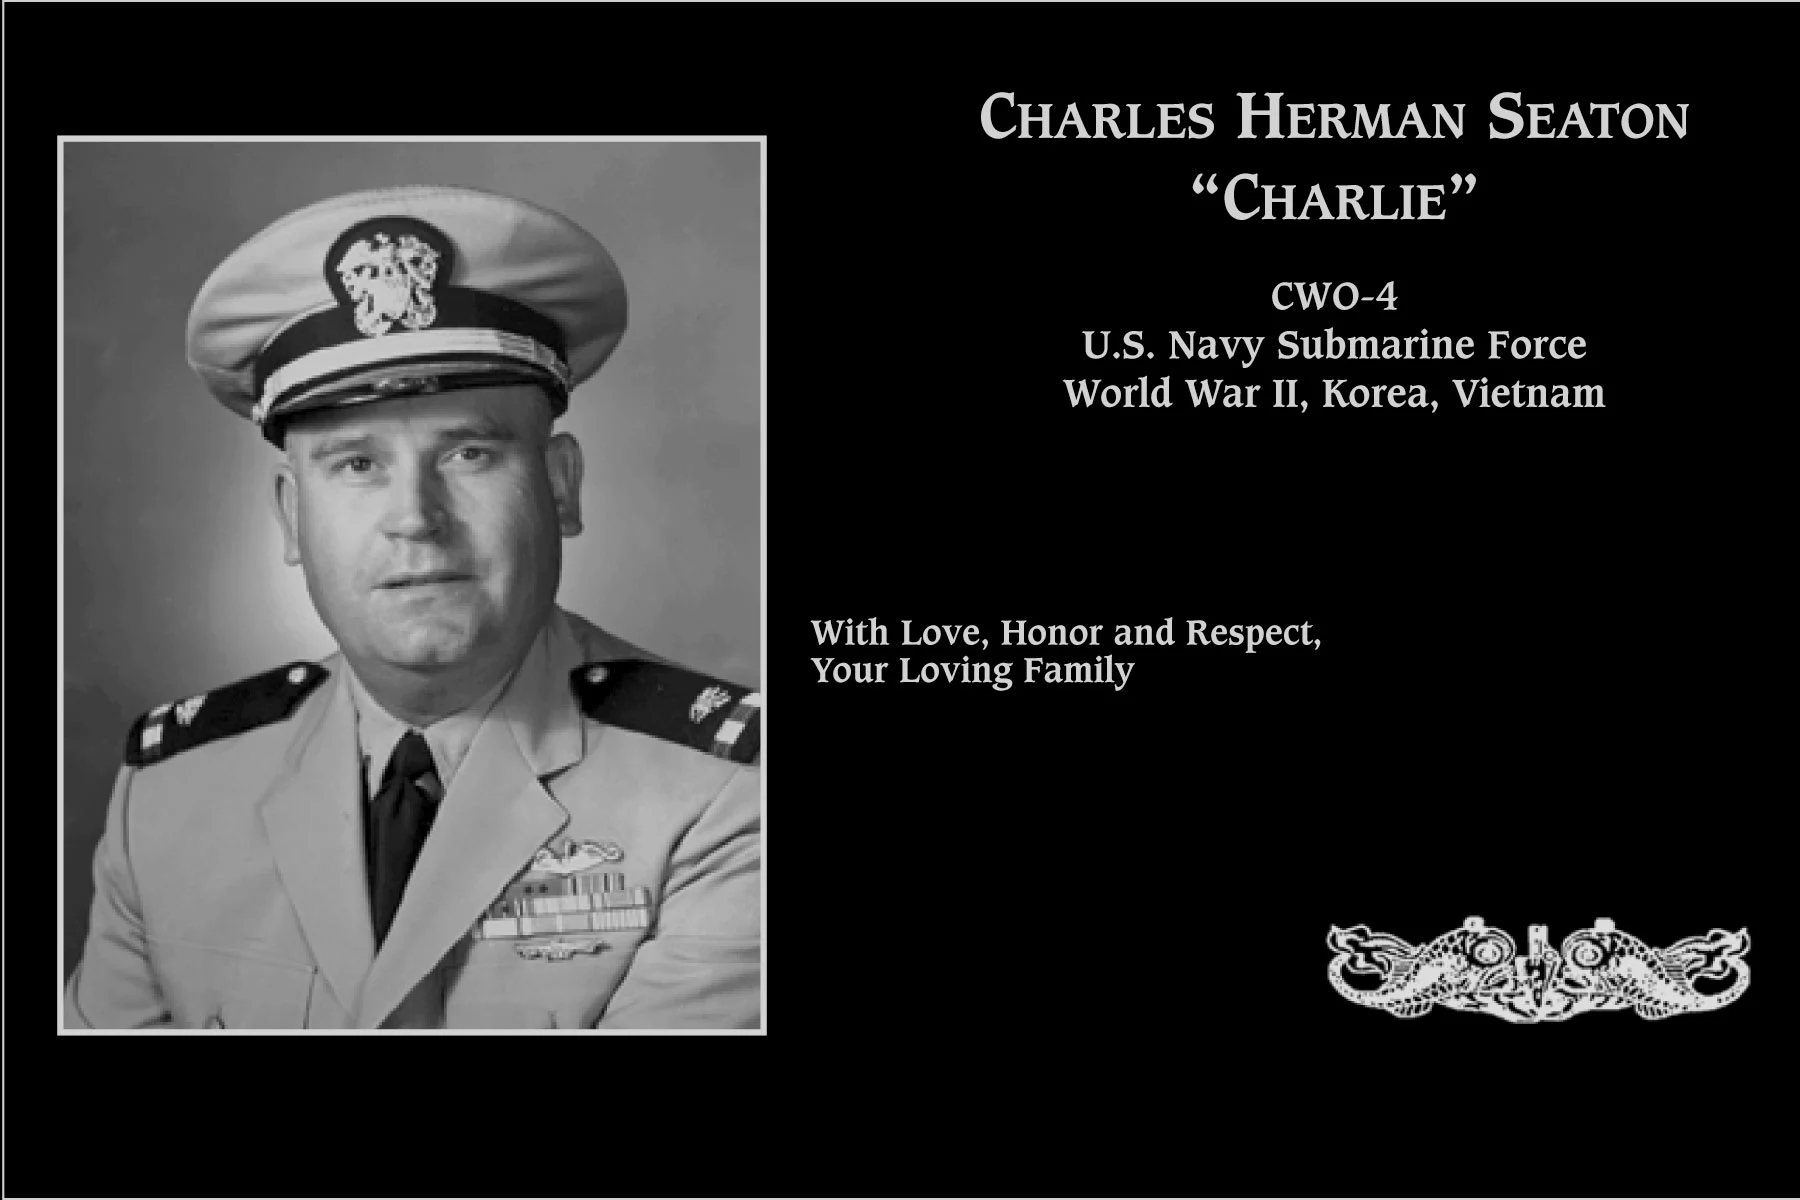 Charles Herman “Charlie” Seaton